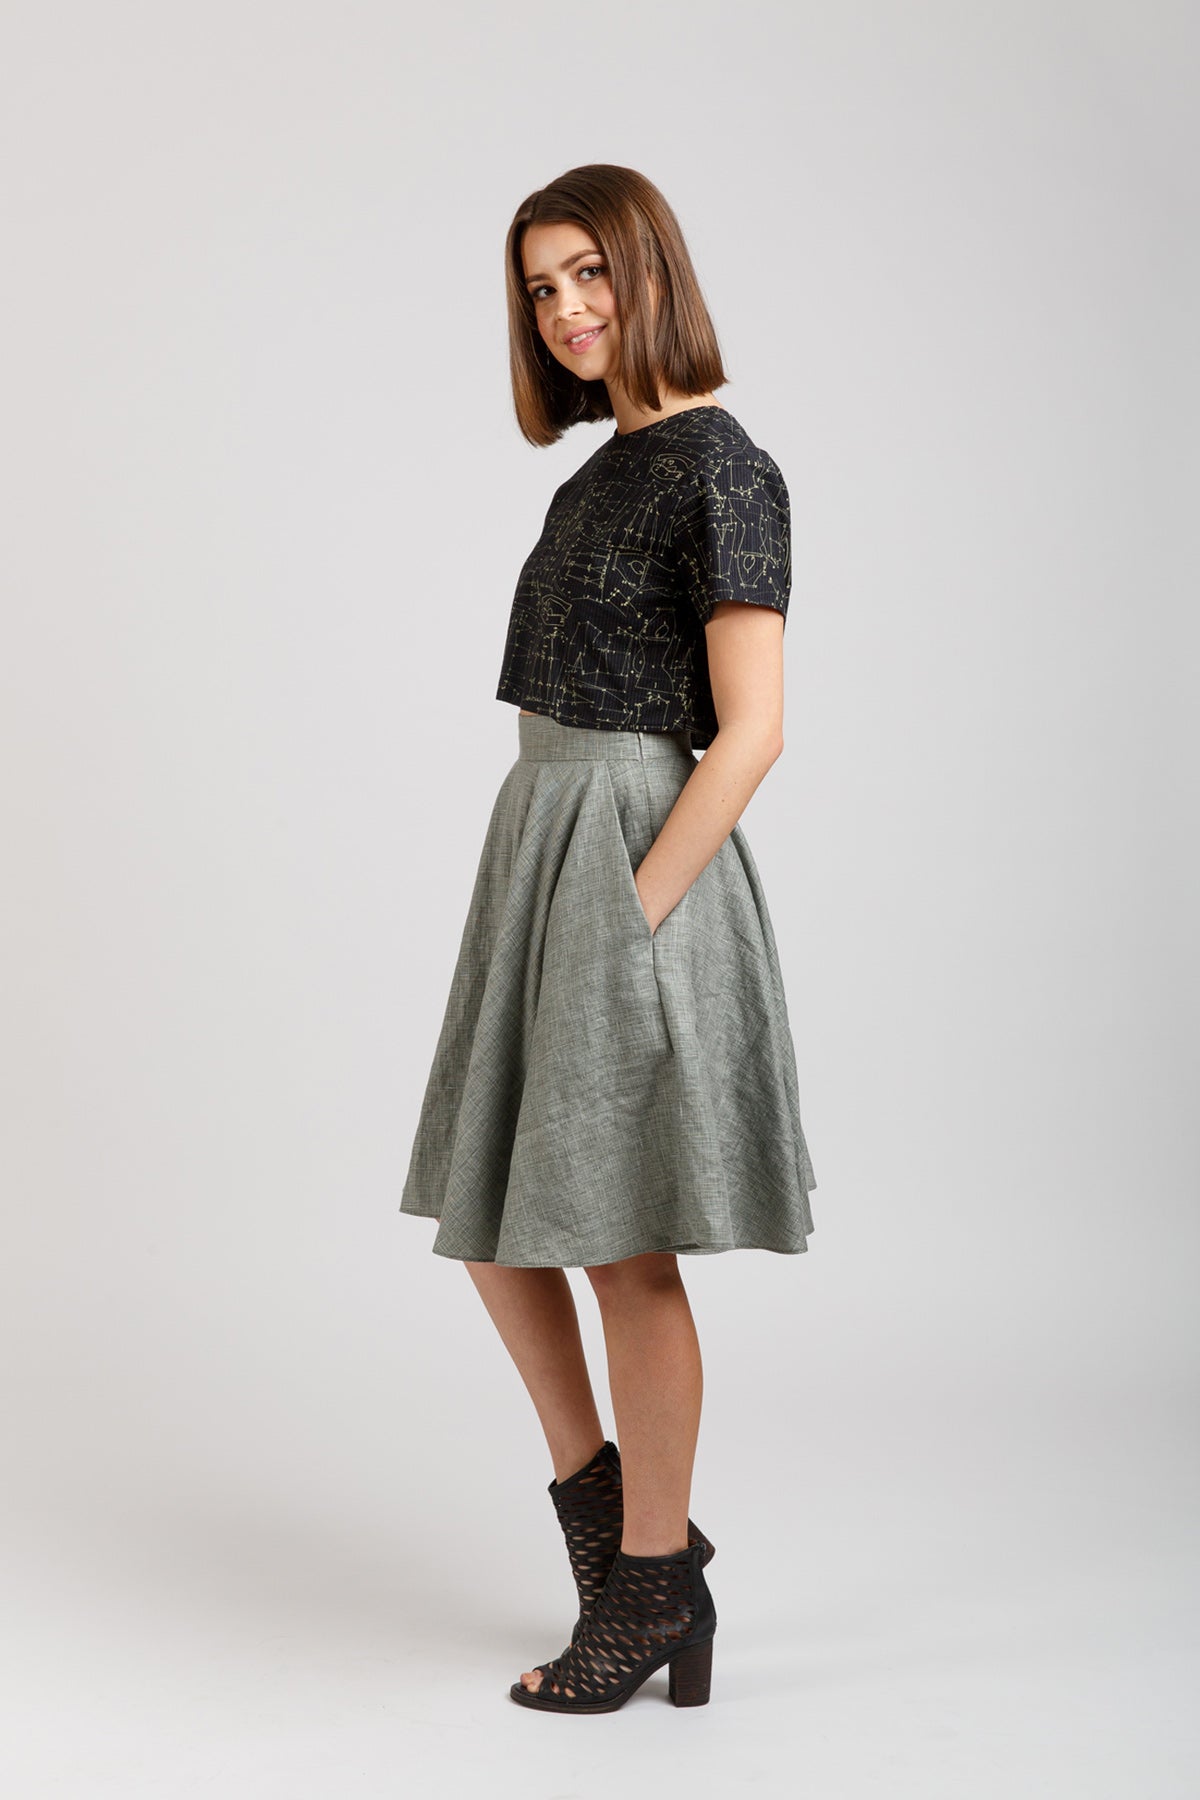 Sudley Blouse & Dress by Megan Nielsen